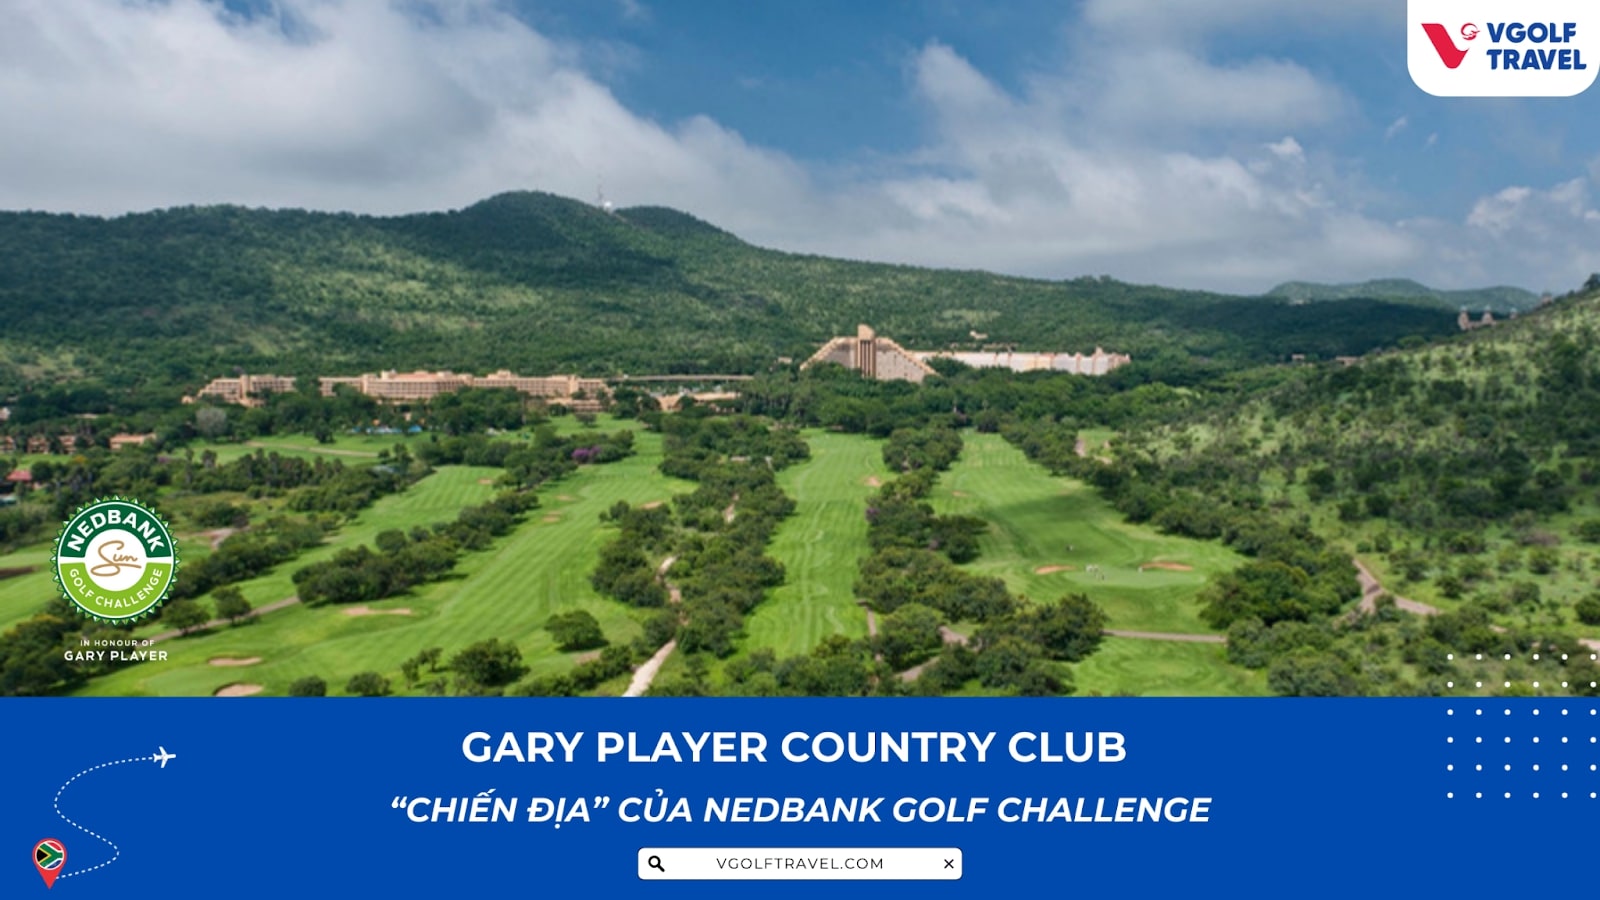 Gary Player Country Club: “Chiến địa” Nedbank Golf Challenge